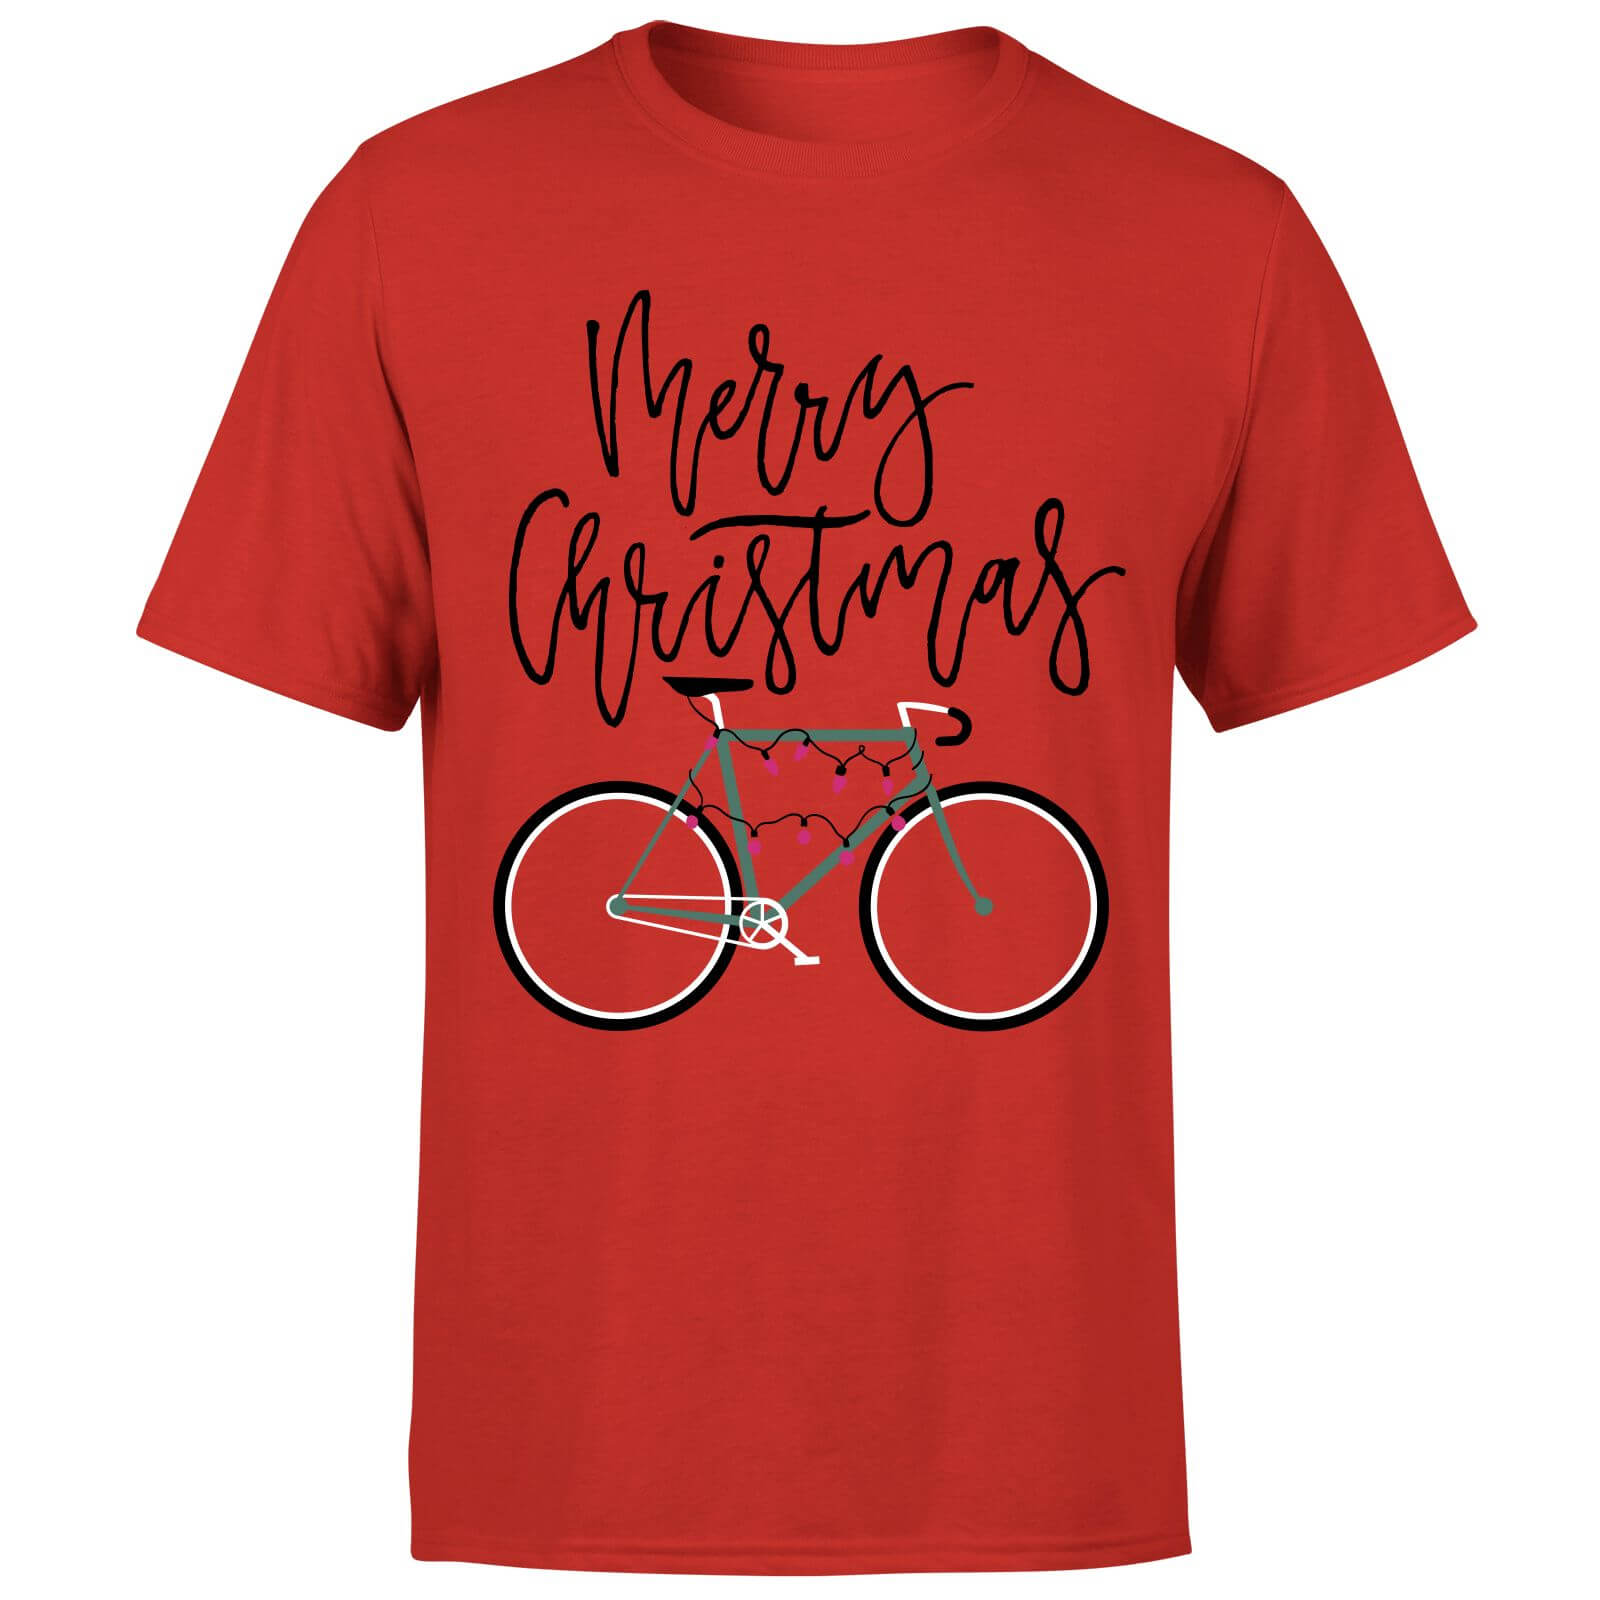 Bike Lights Men's Christmas T-Shirt - Red - S - Red